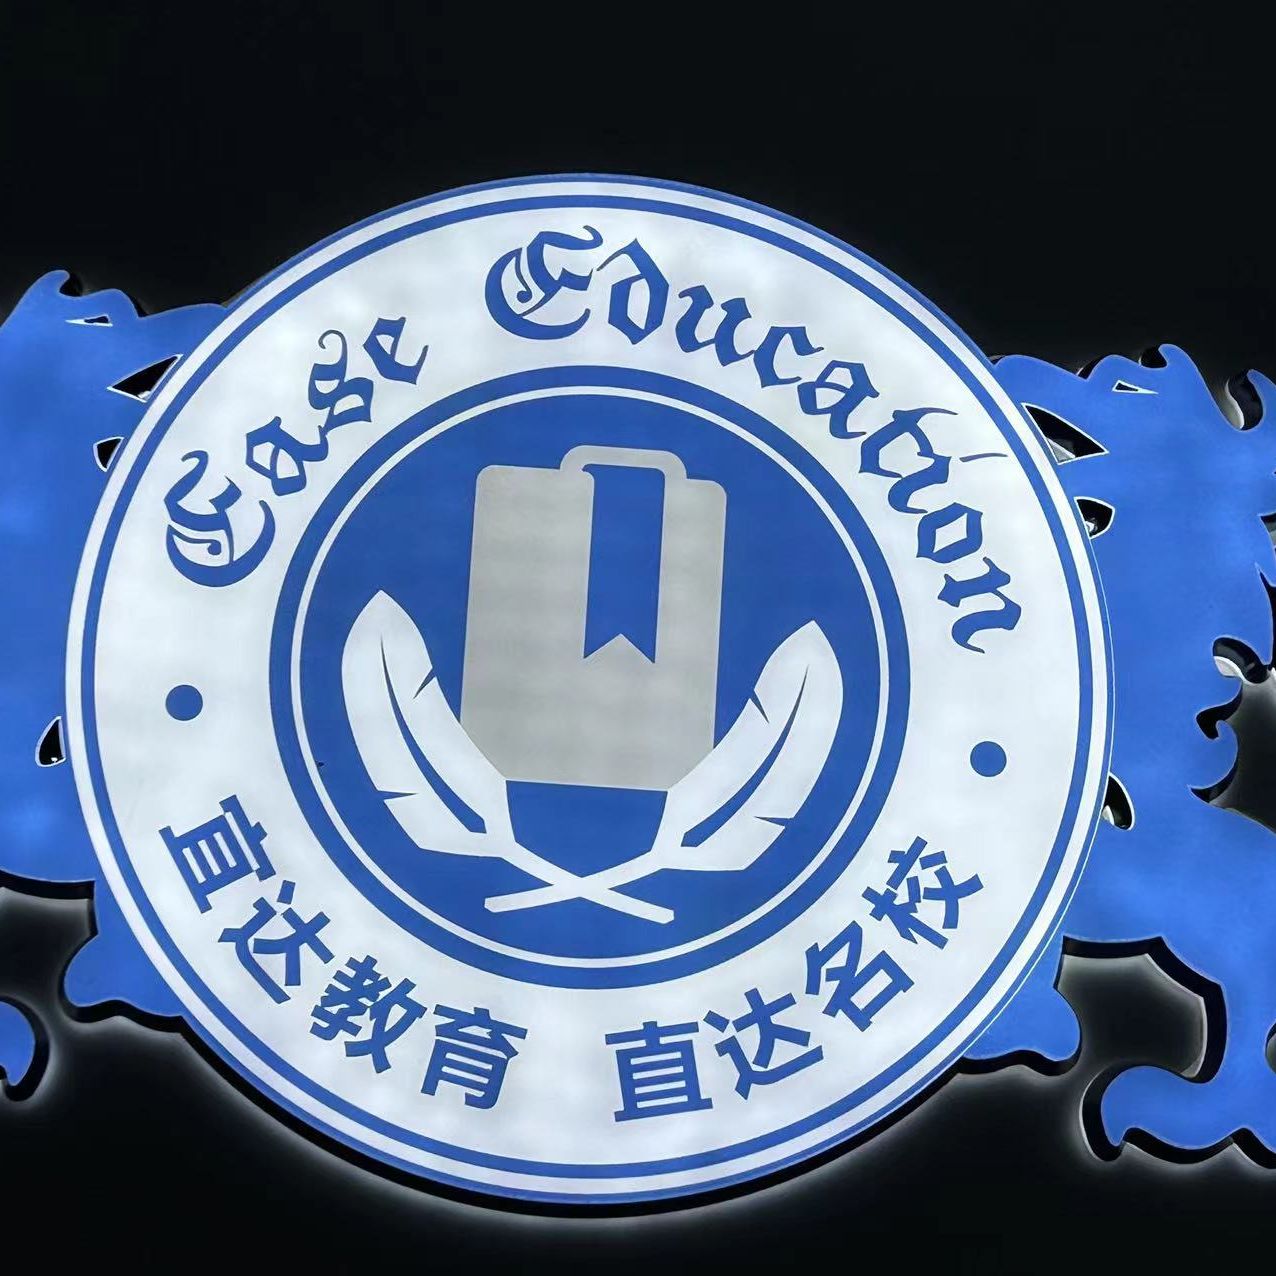 Ease Education Consultant Company logo